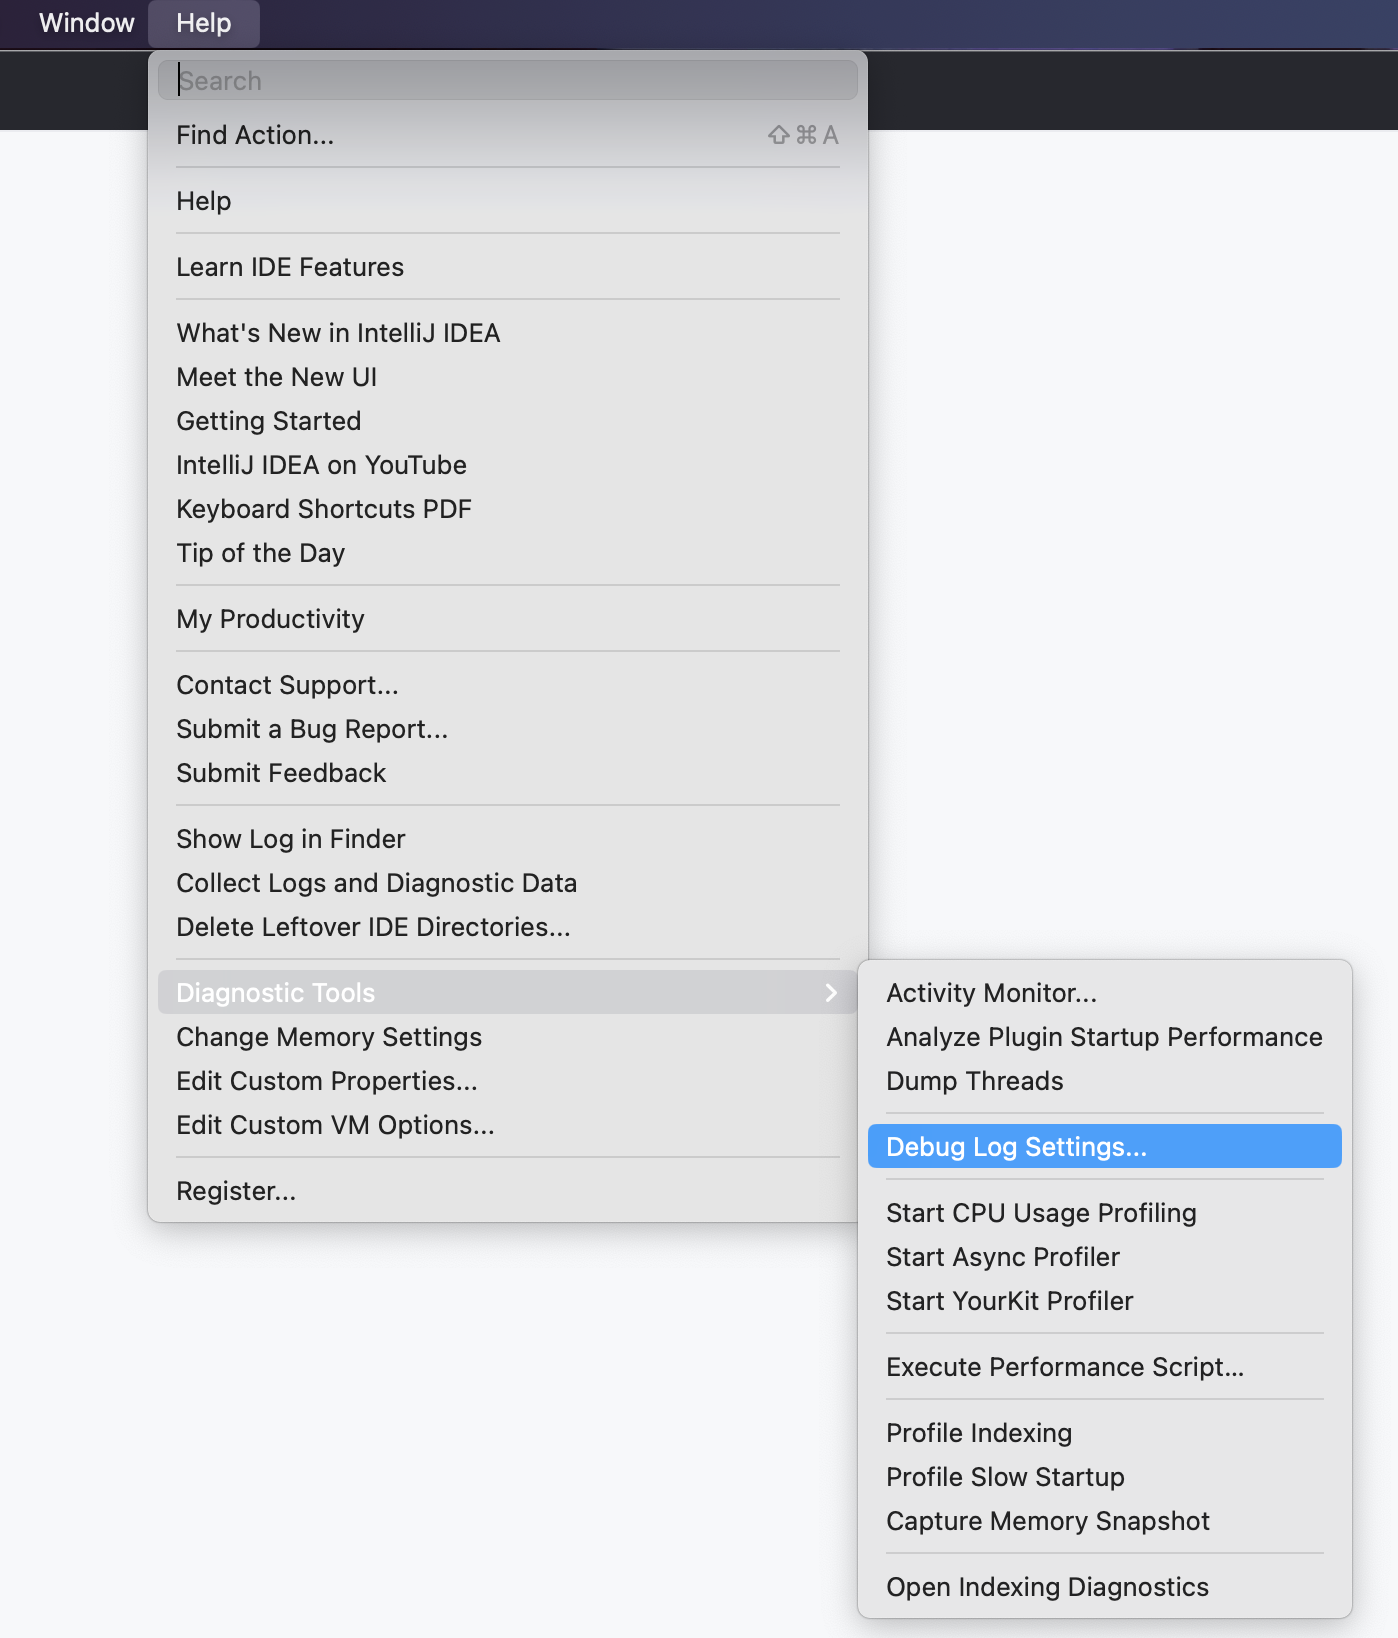 JetBrains IDE 中菜单栏的屏幕截图。 “帮助”菜单和“诊断工具”子菜单已展开，“调试日志设置”选项以蓝色突出显示。